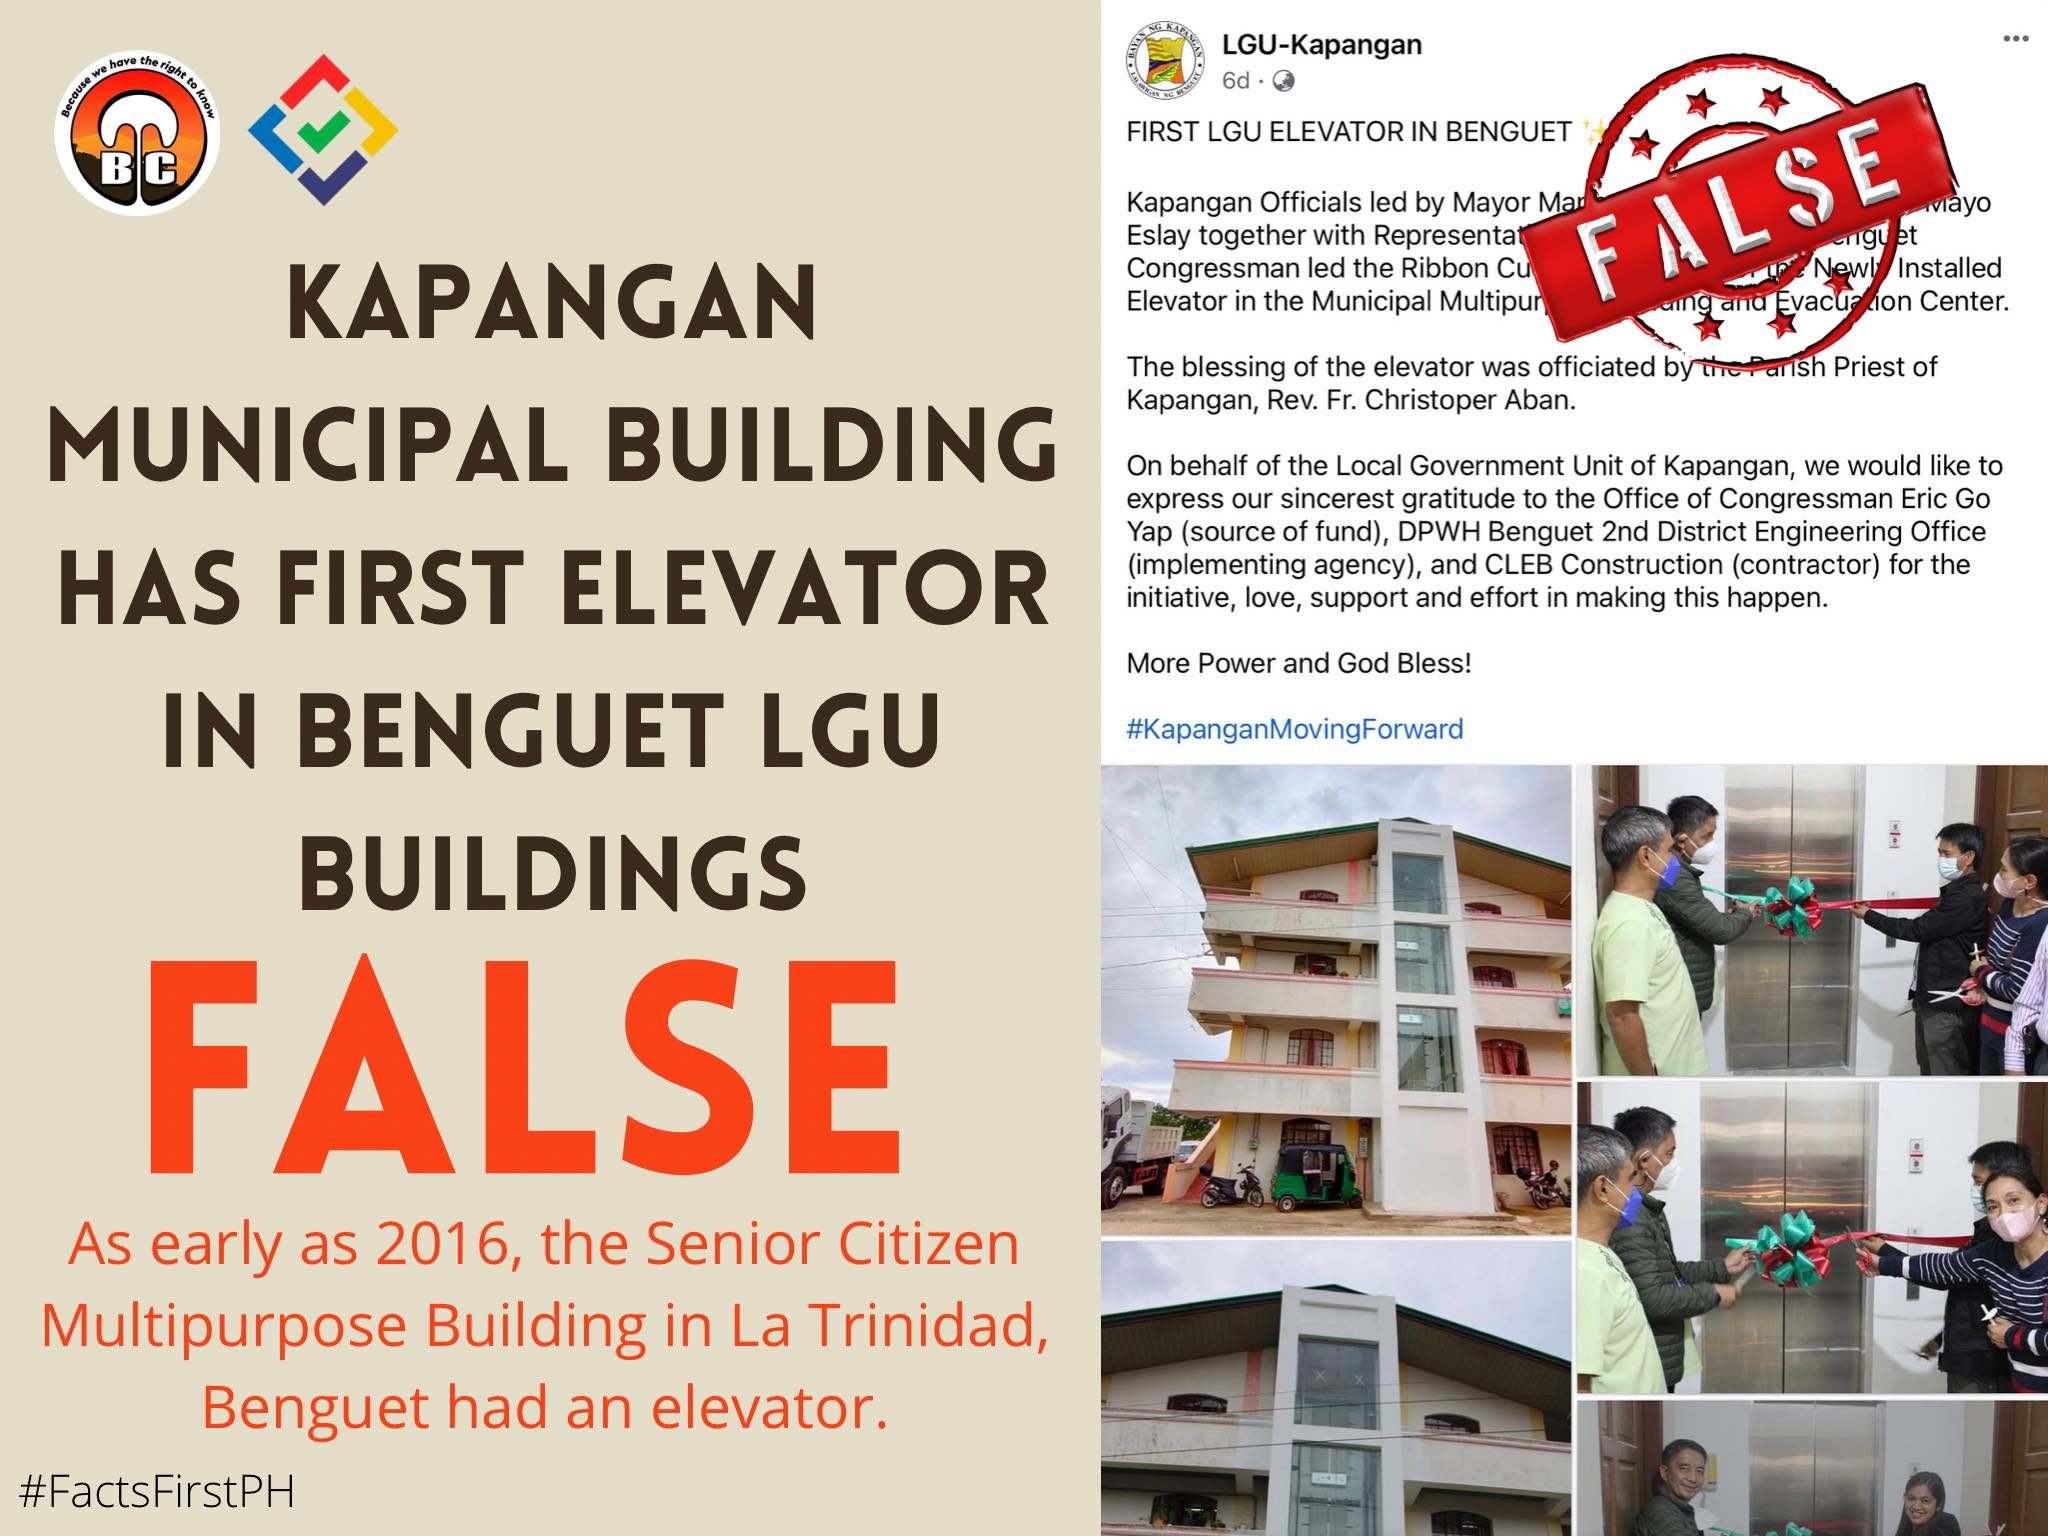 FACT CHECK – Kapangan municipal building has first elevator in Benguet LGU buildings